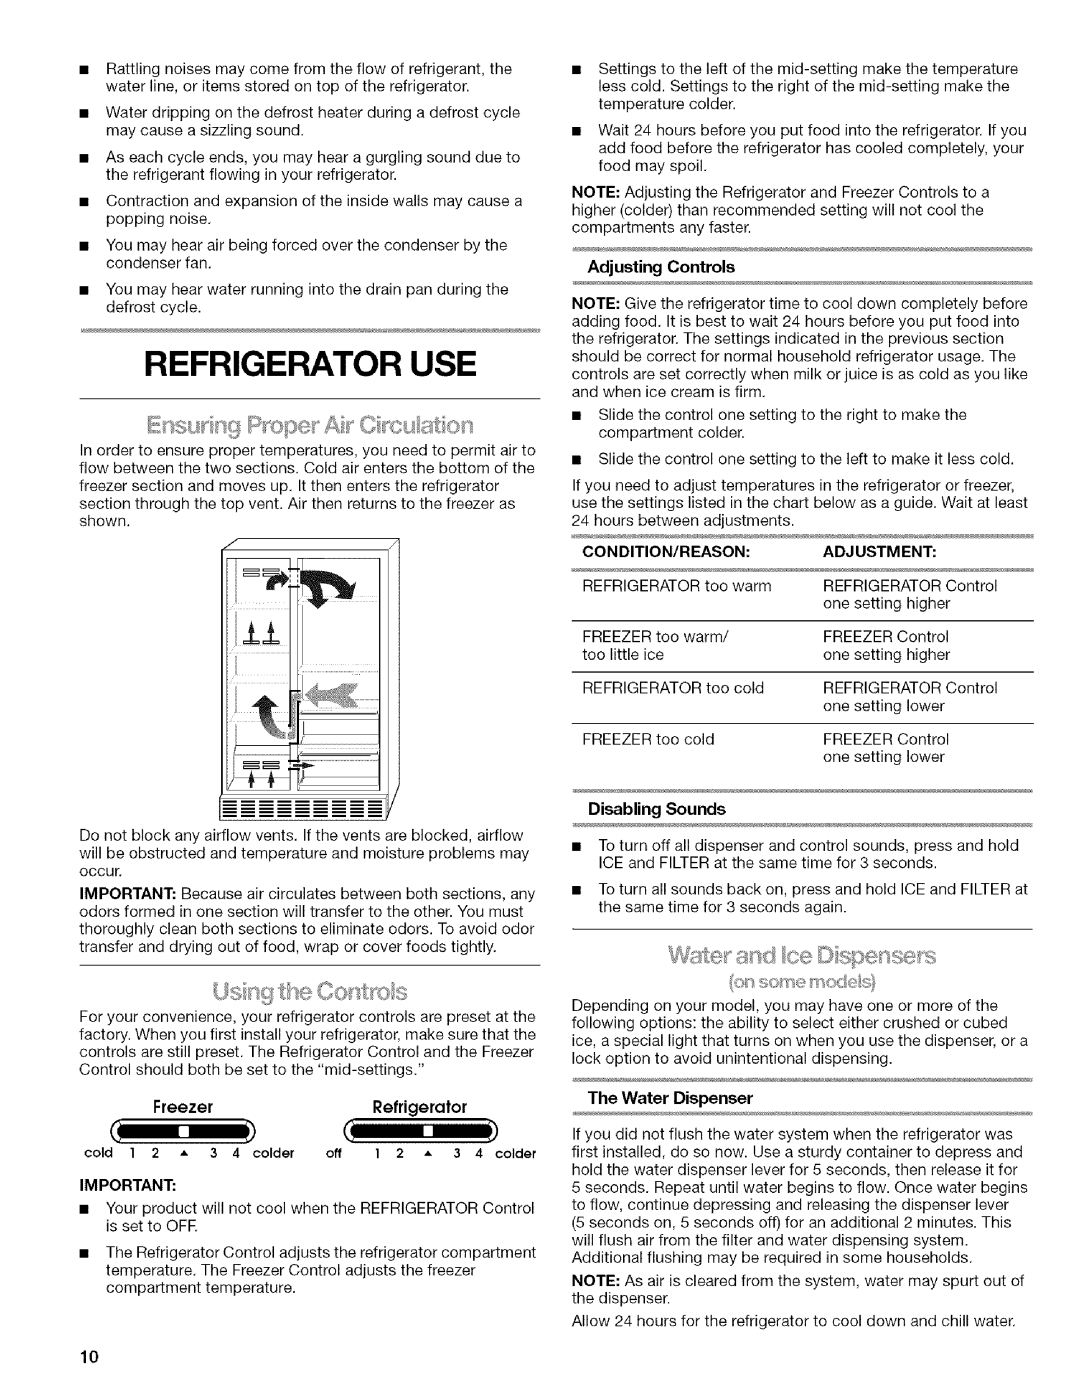 Kenmore WIOI67097A manual Refrigerator Use, Rattlingnoisesmaycomefromtheflowofrefrigerant,the 